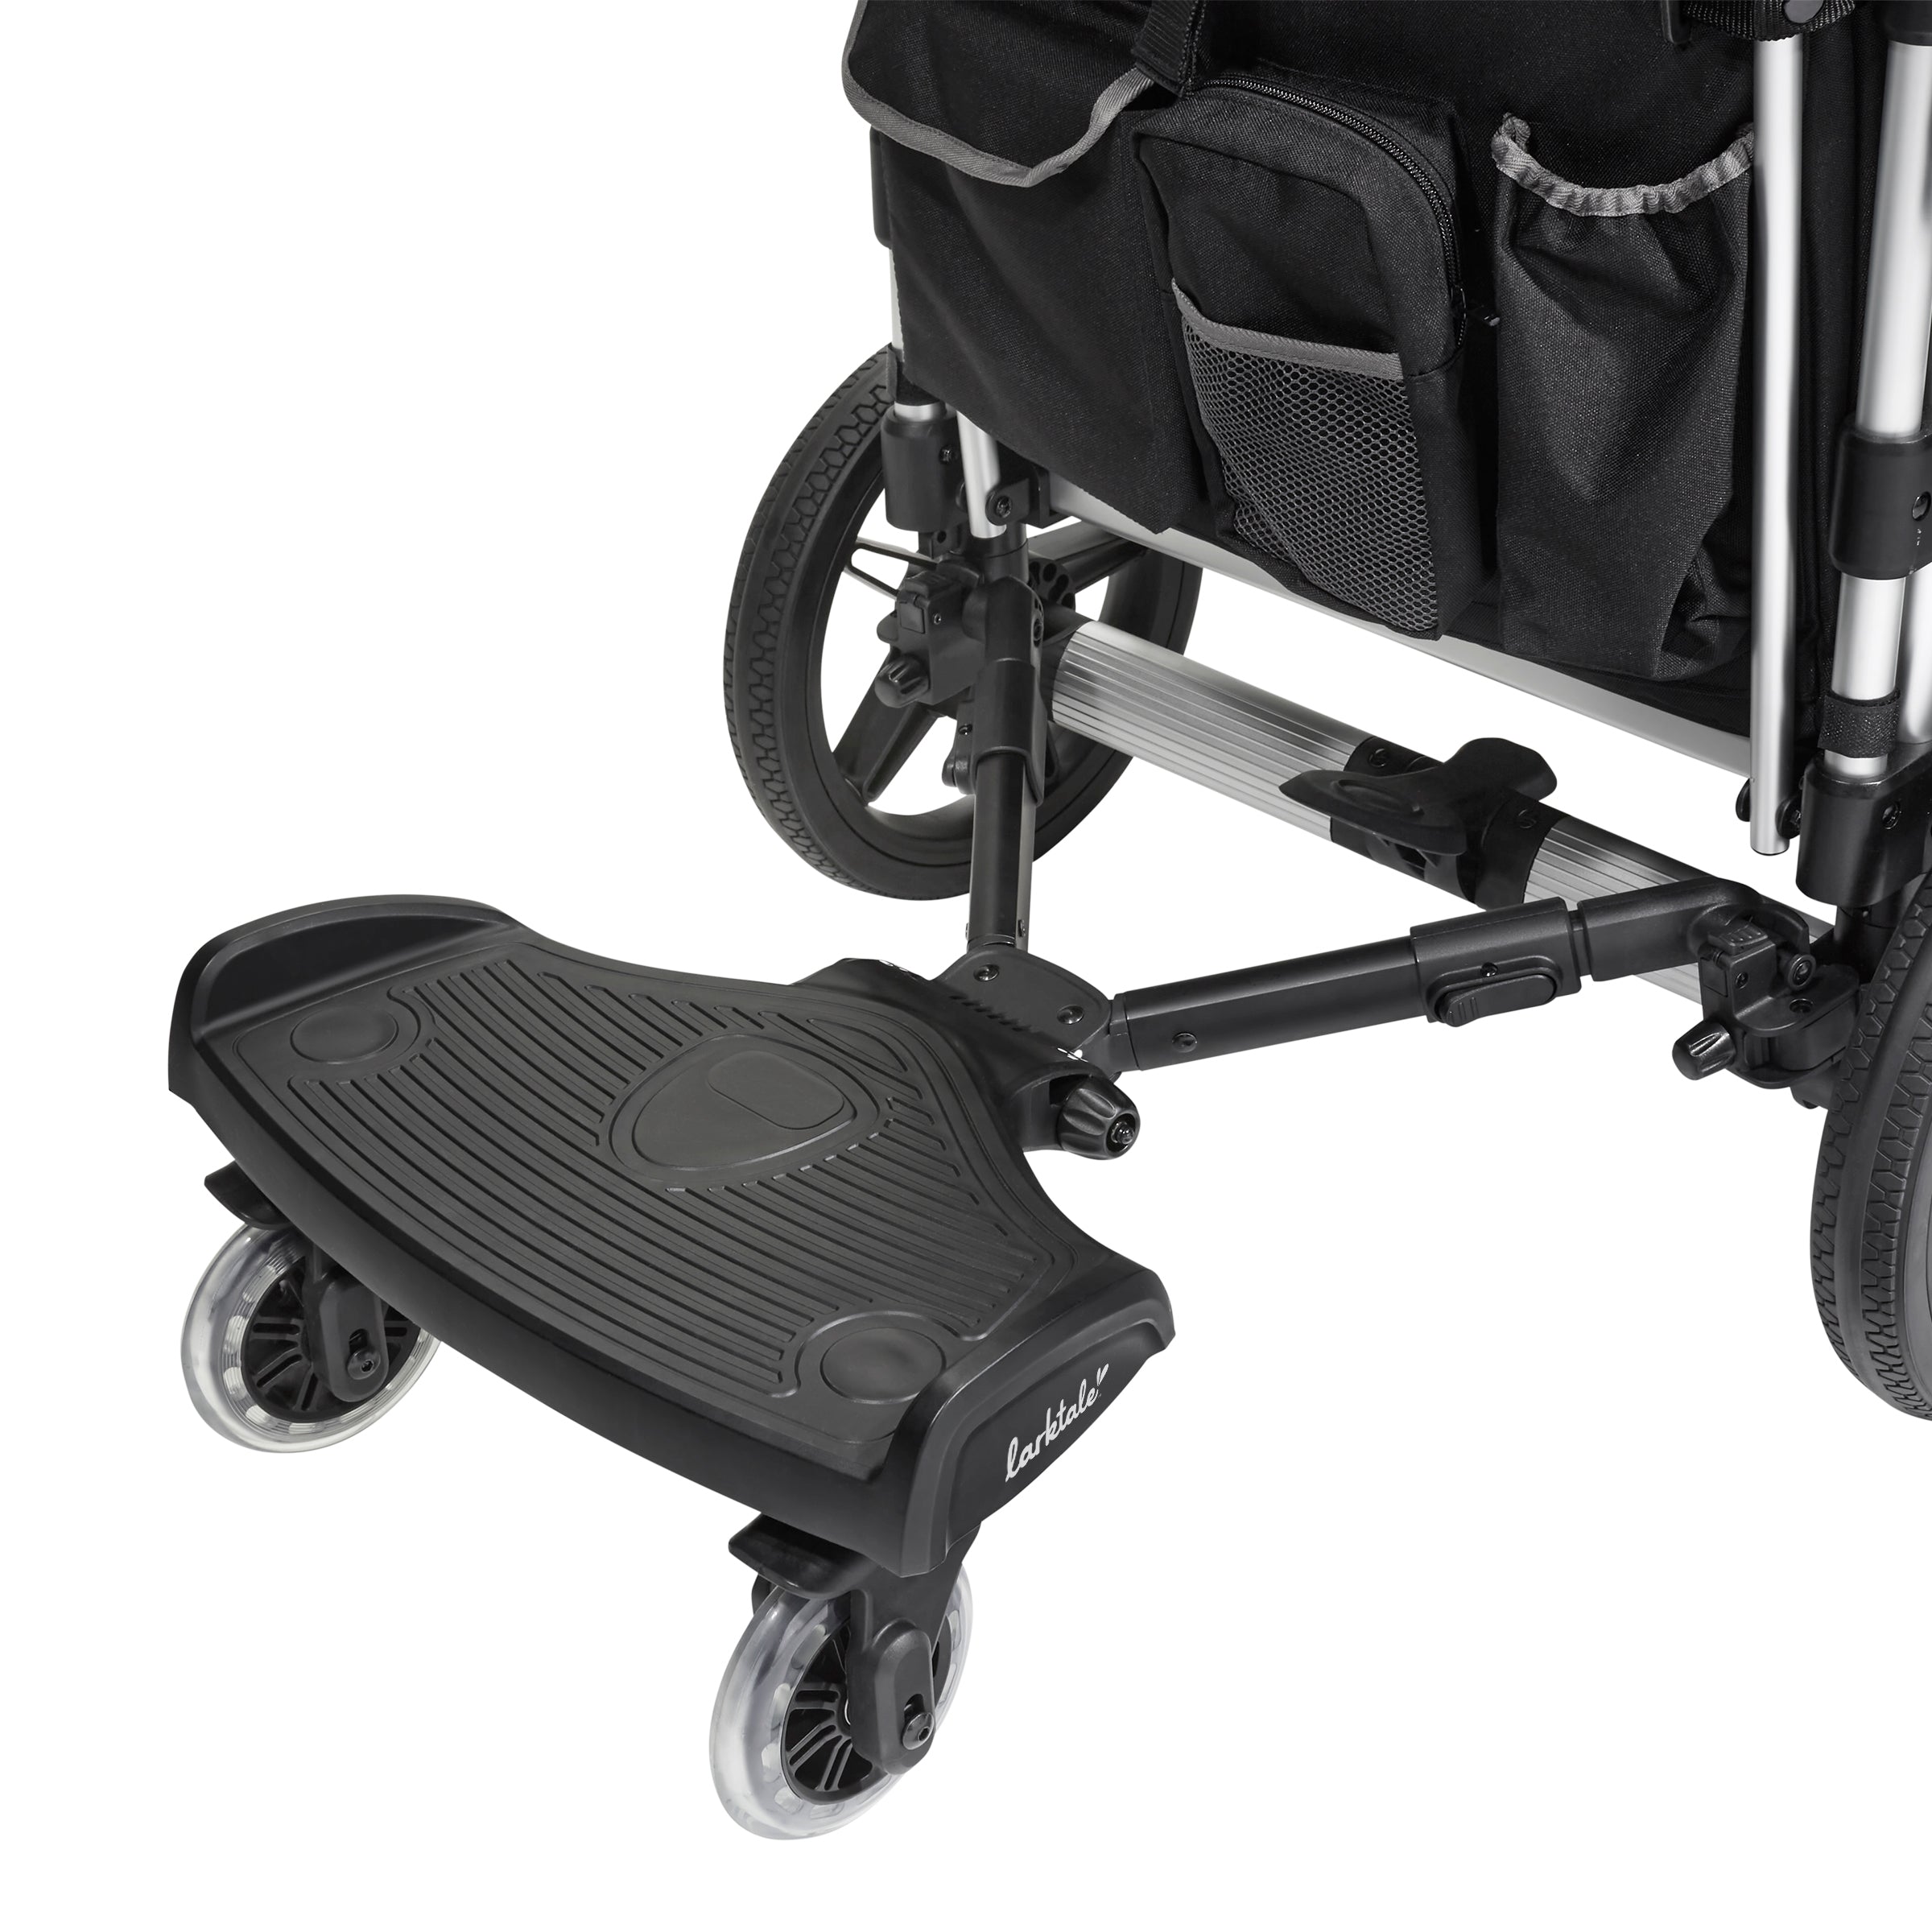 larktale stroller board attached to a stroller wagon in platform mode